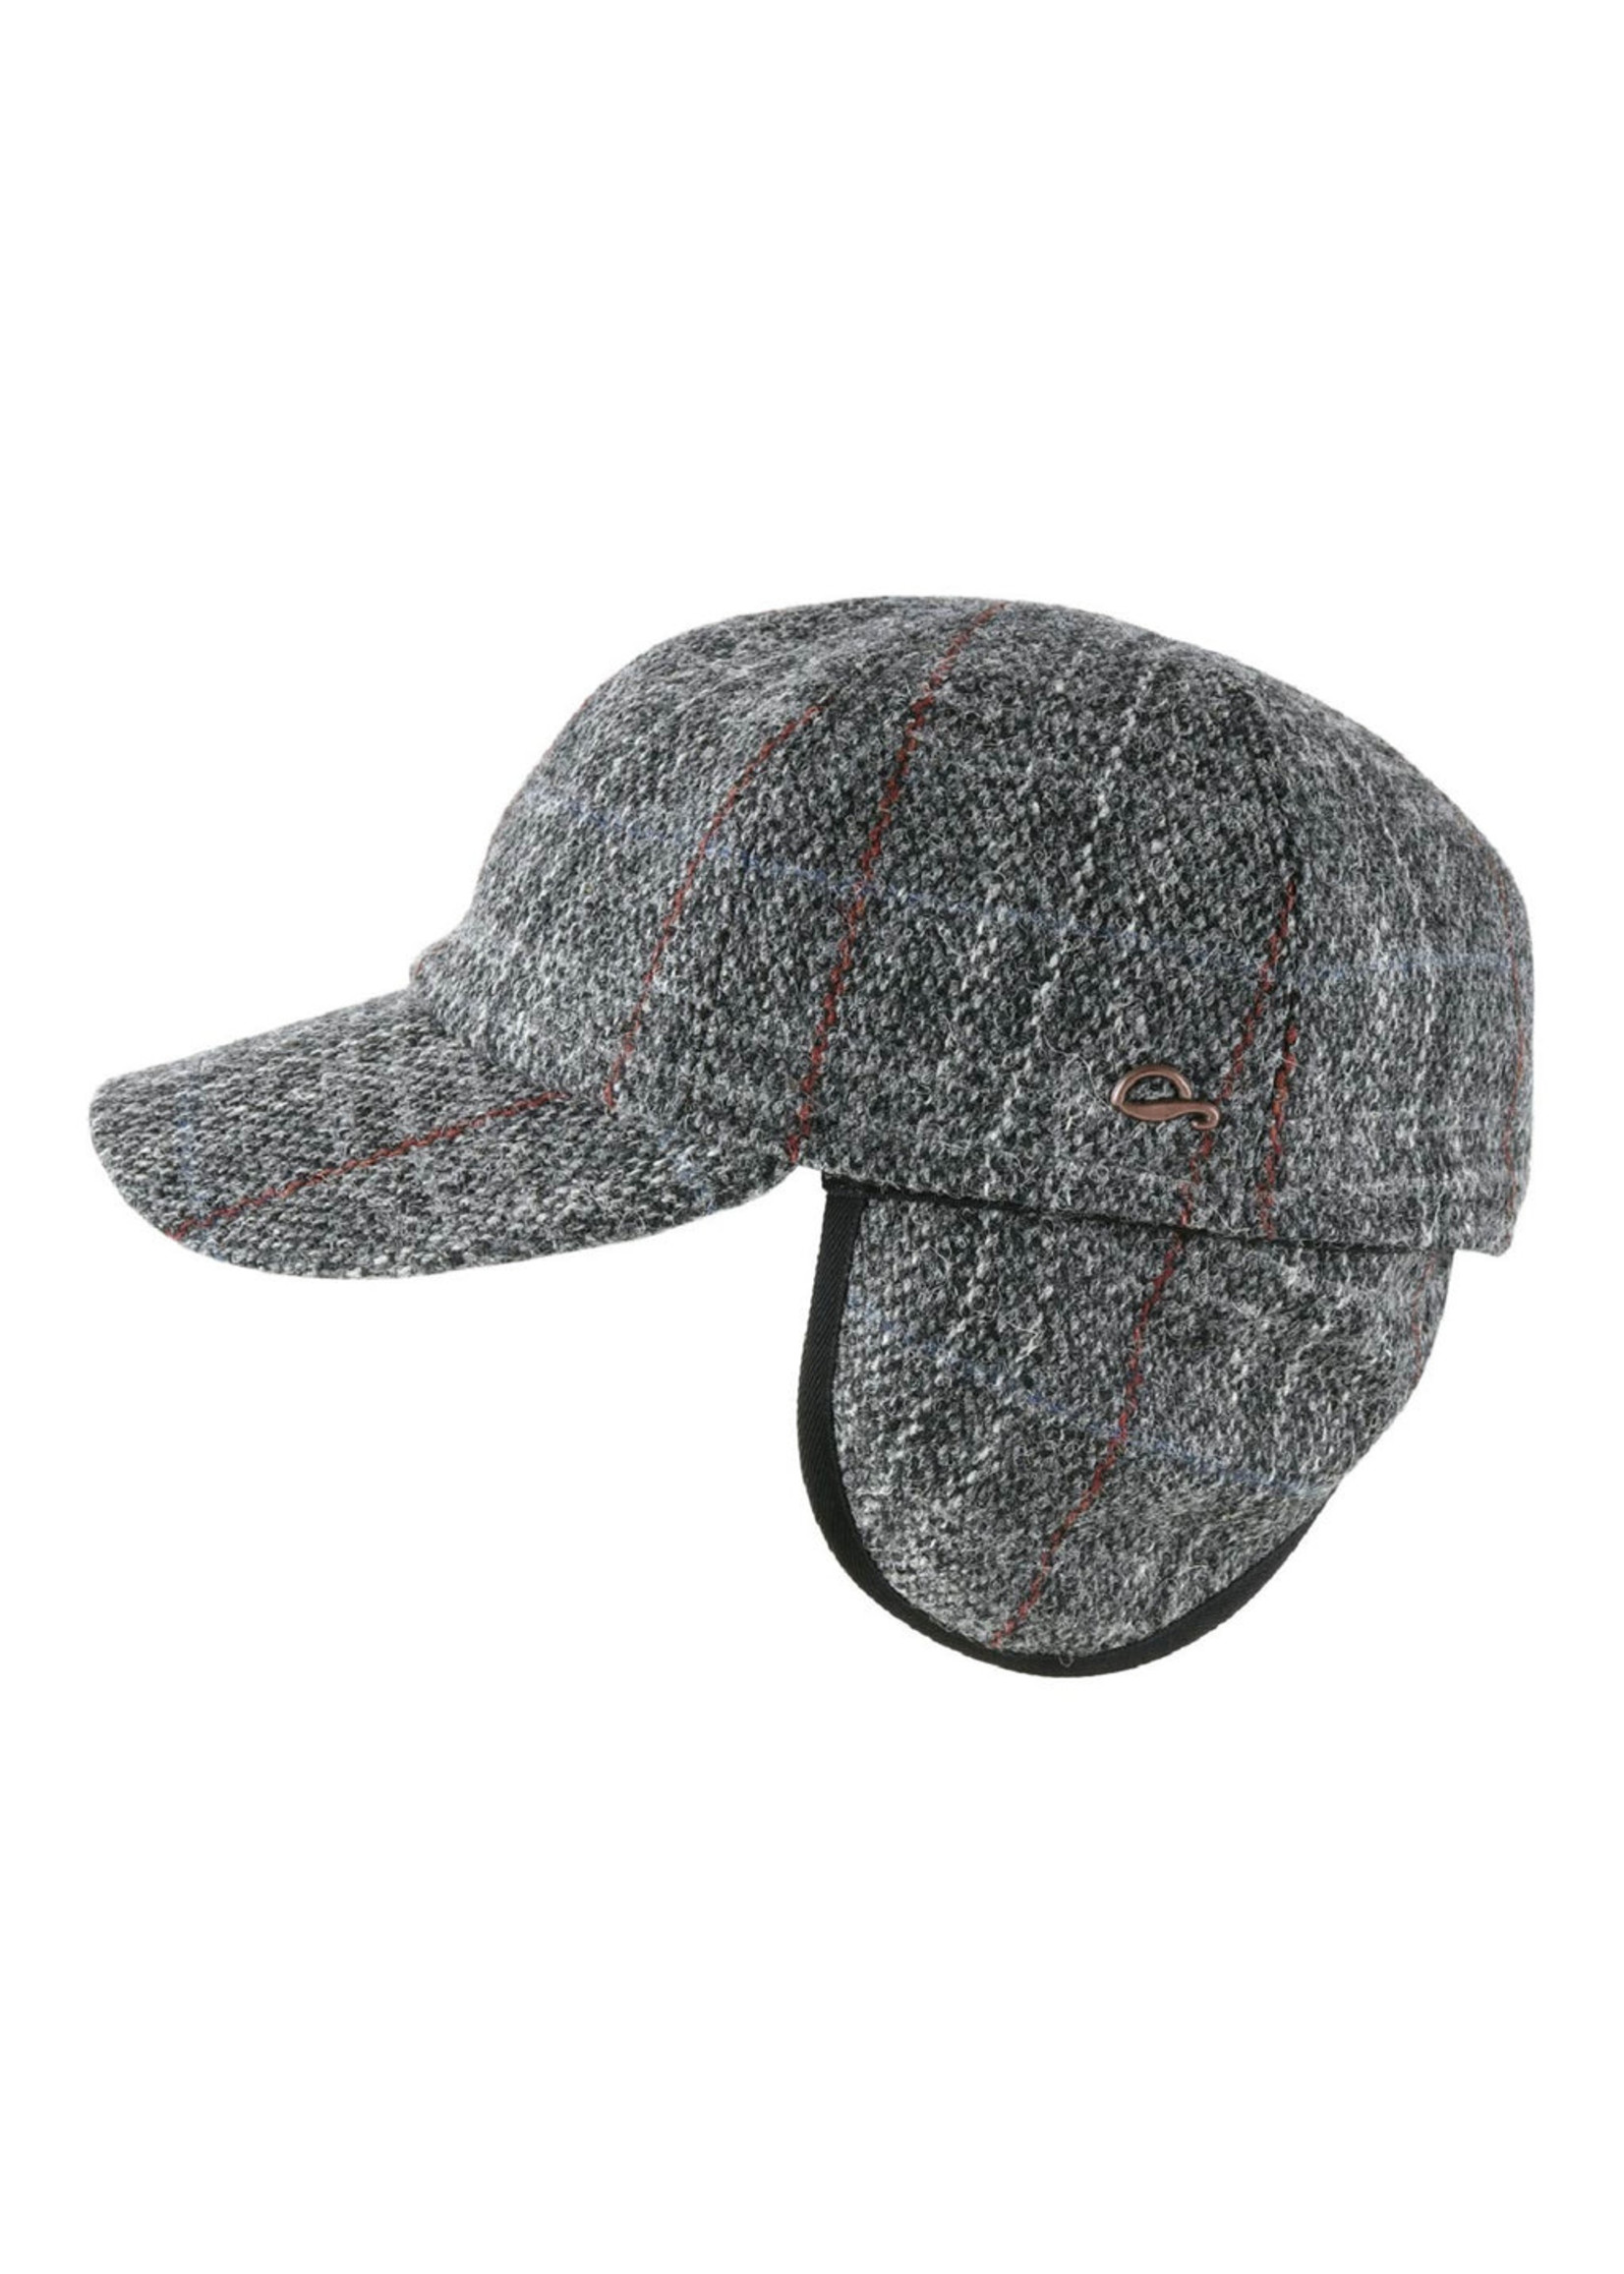 GÖTTMANN Men's Harris Tweed wool baseball cap